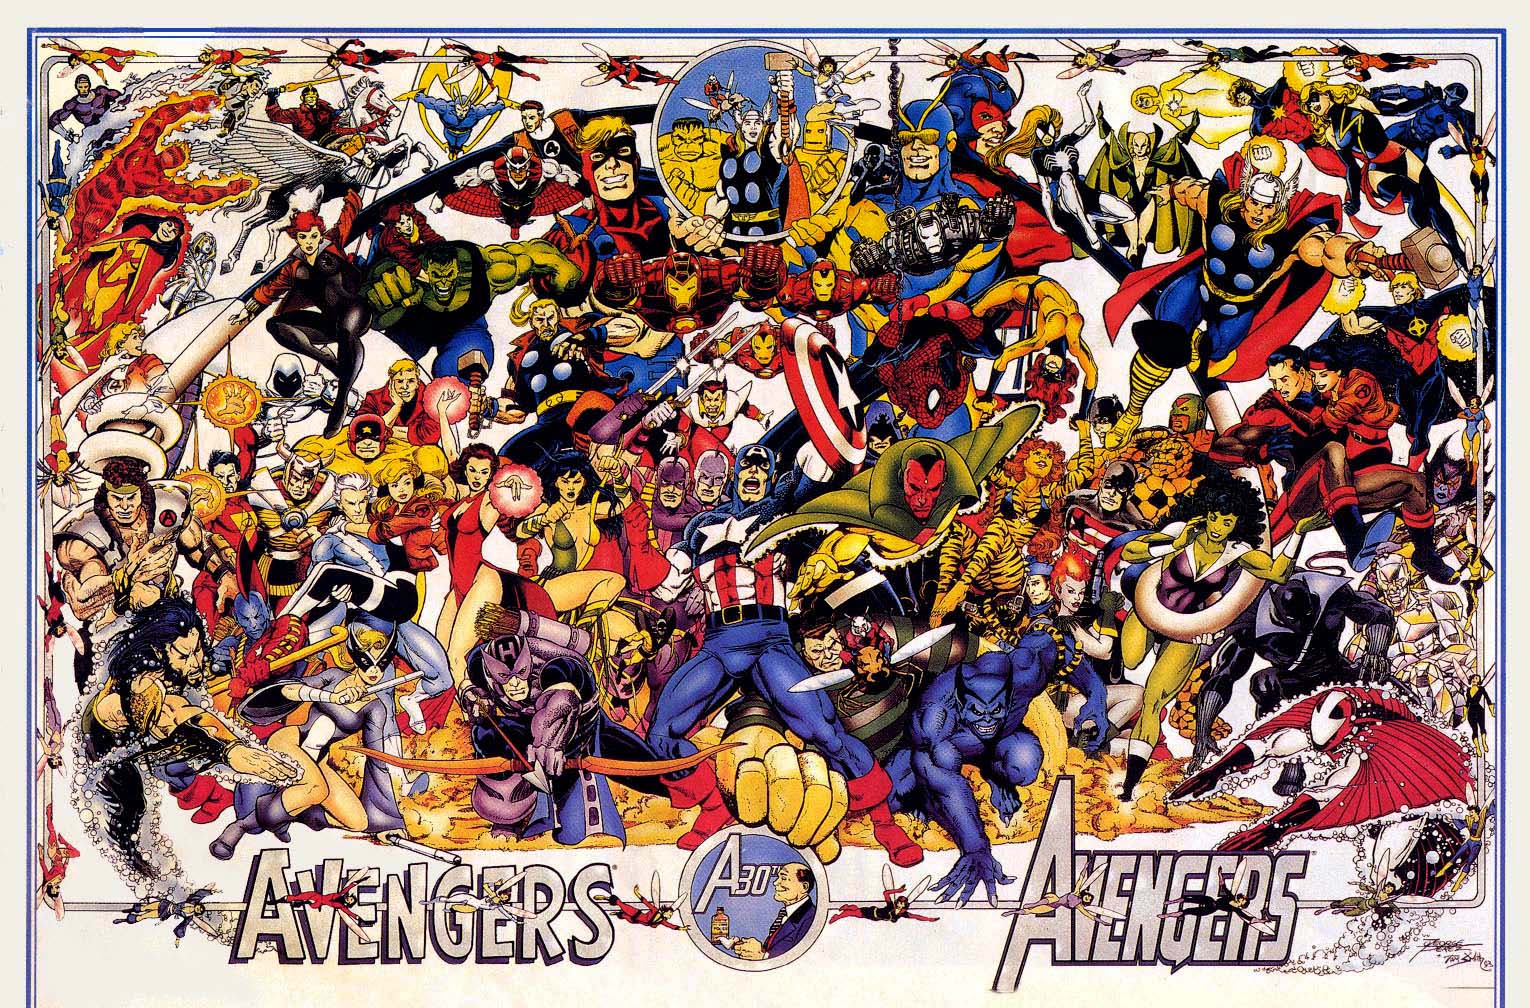 http://2.bp.blogspot.com/-FBb2IAmnu1Q/UBKImQVW4vI/AAAAAAAACKE/gdQcgdX65LY/s1600/Avengers+Perez.jpg